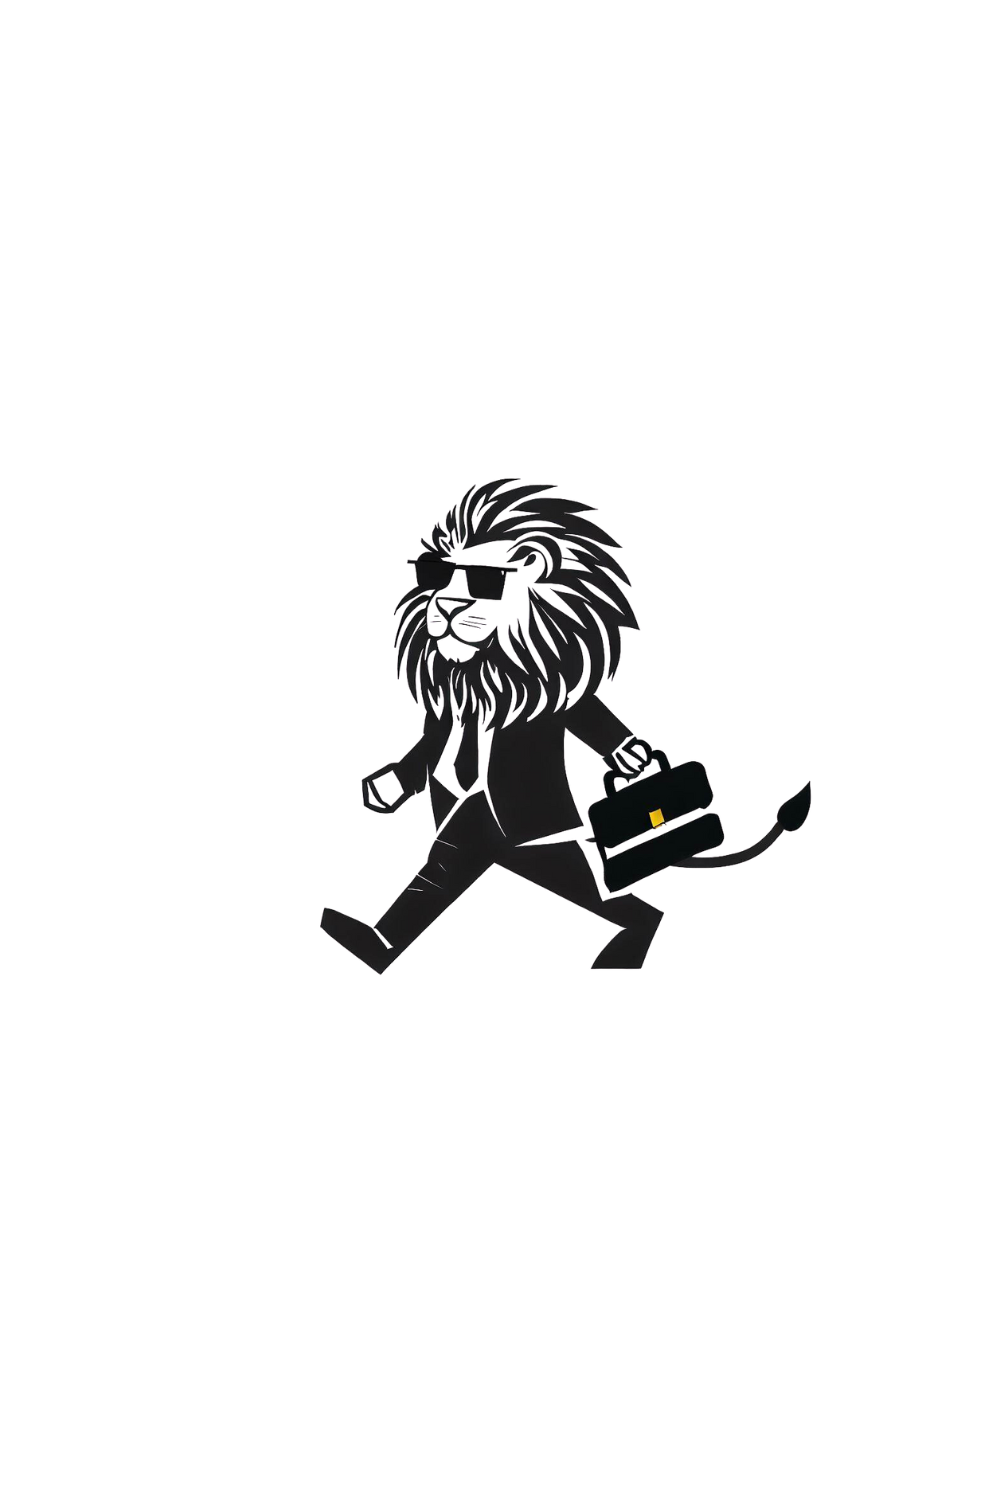 Cool Lion logo pinterest preview image.